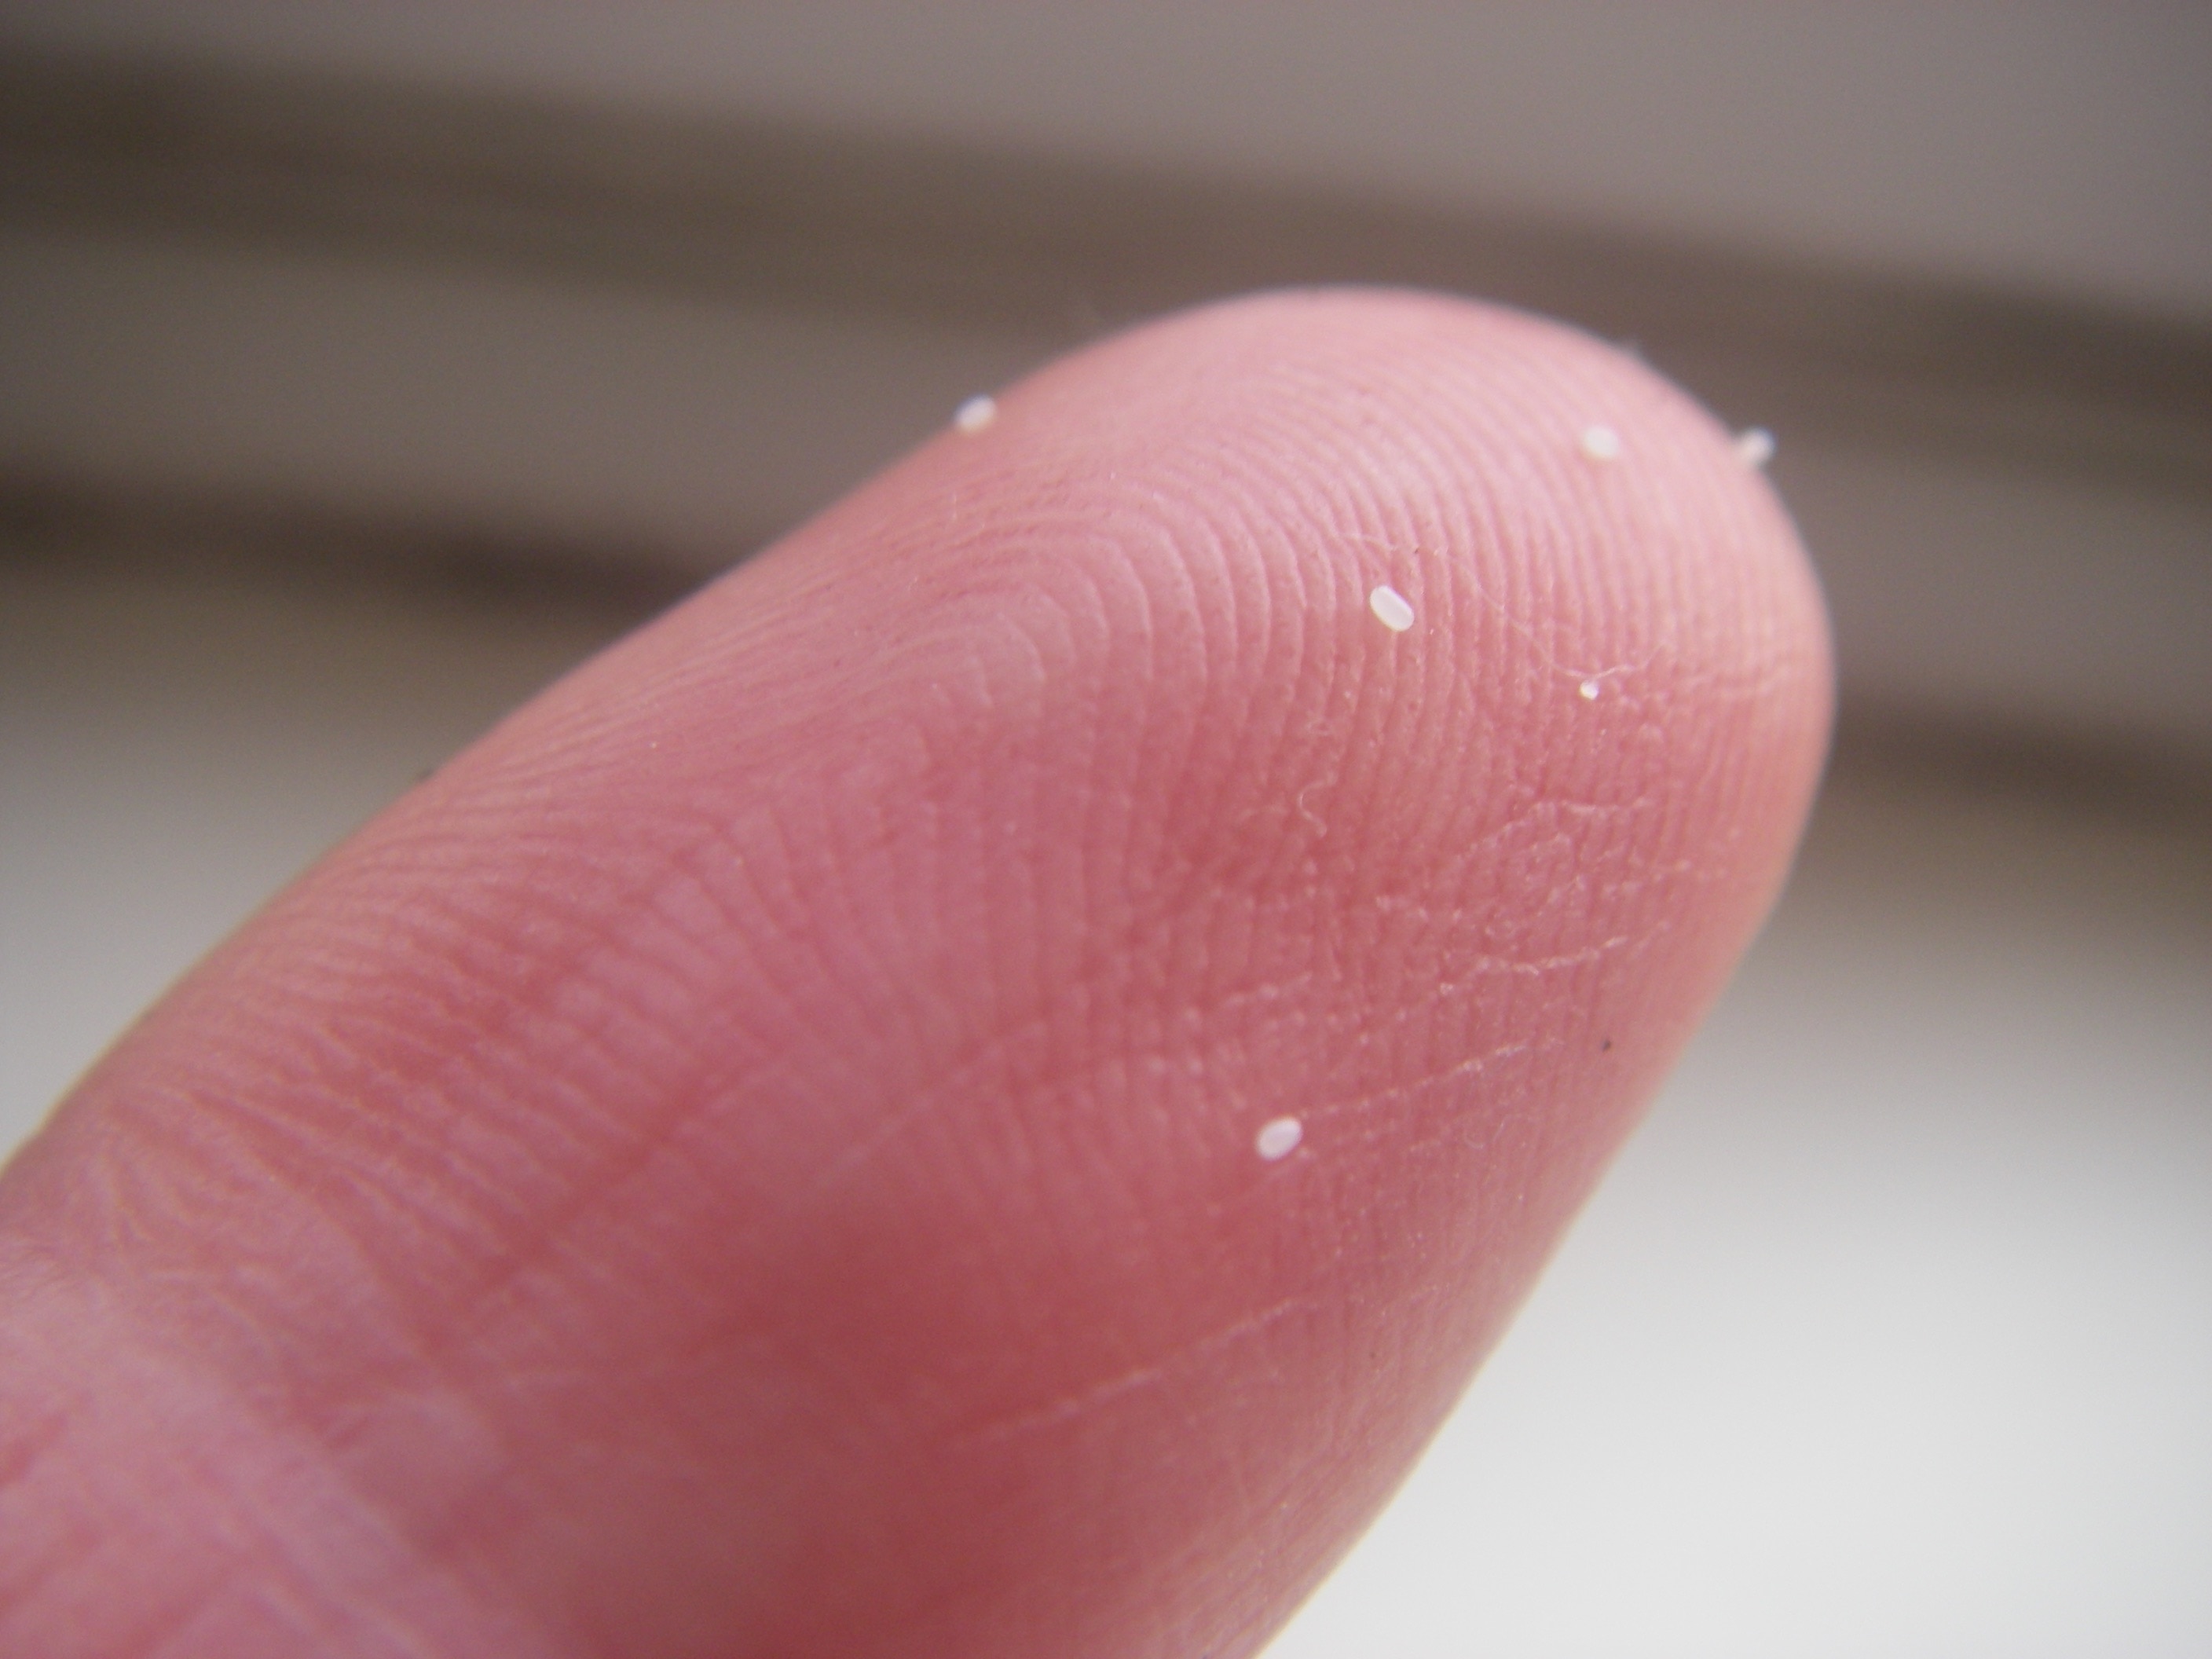 tiny white flea eggs on someone's finger